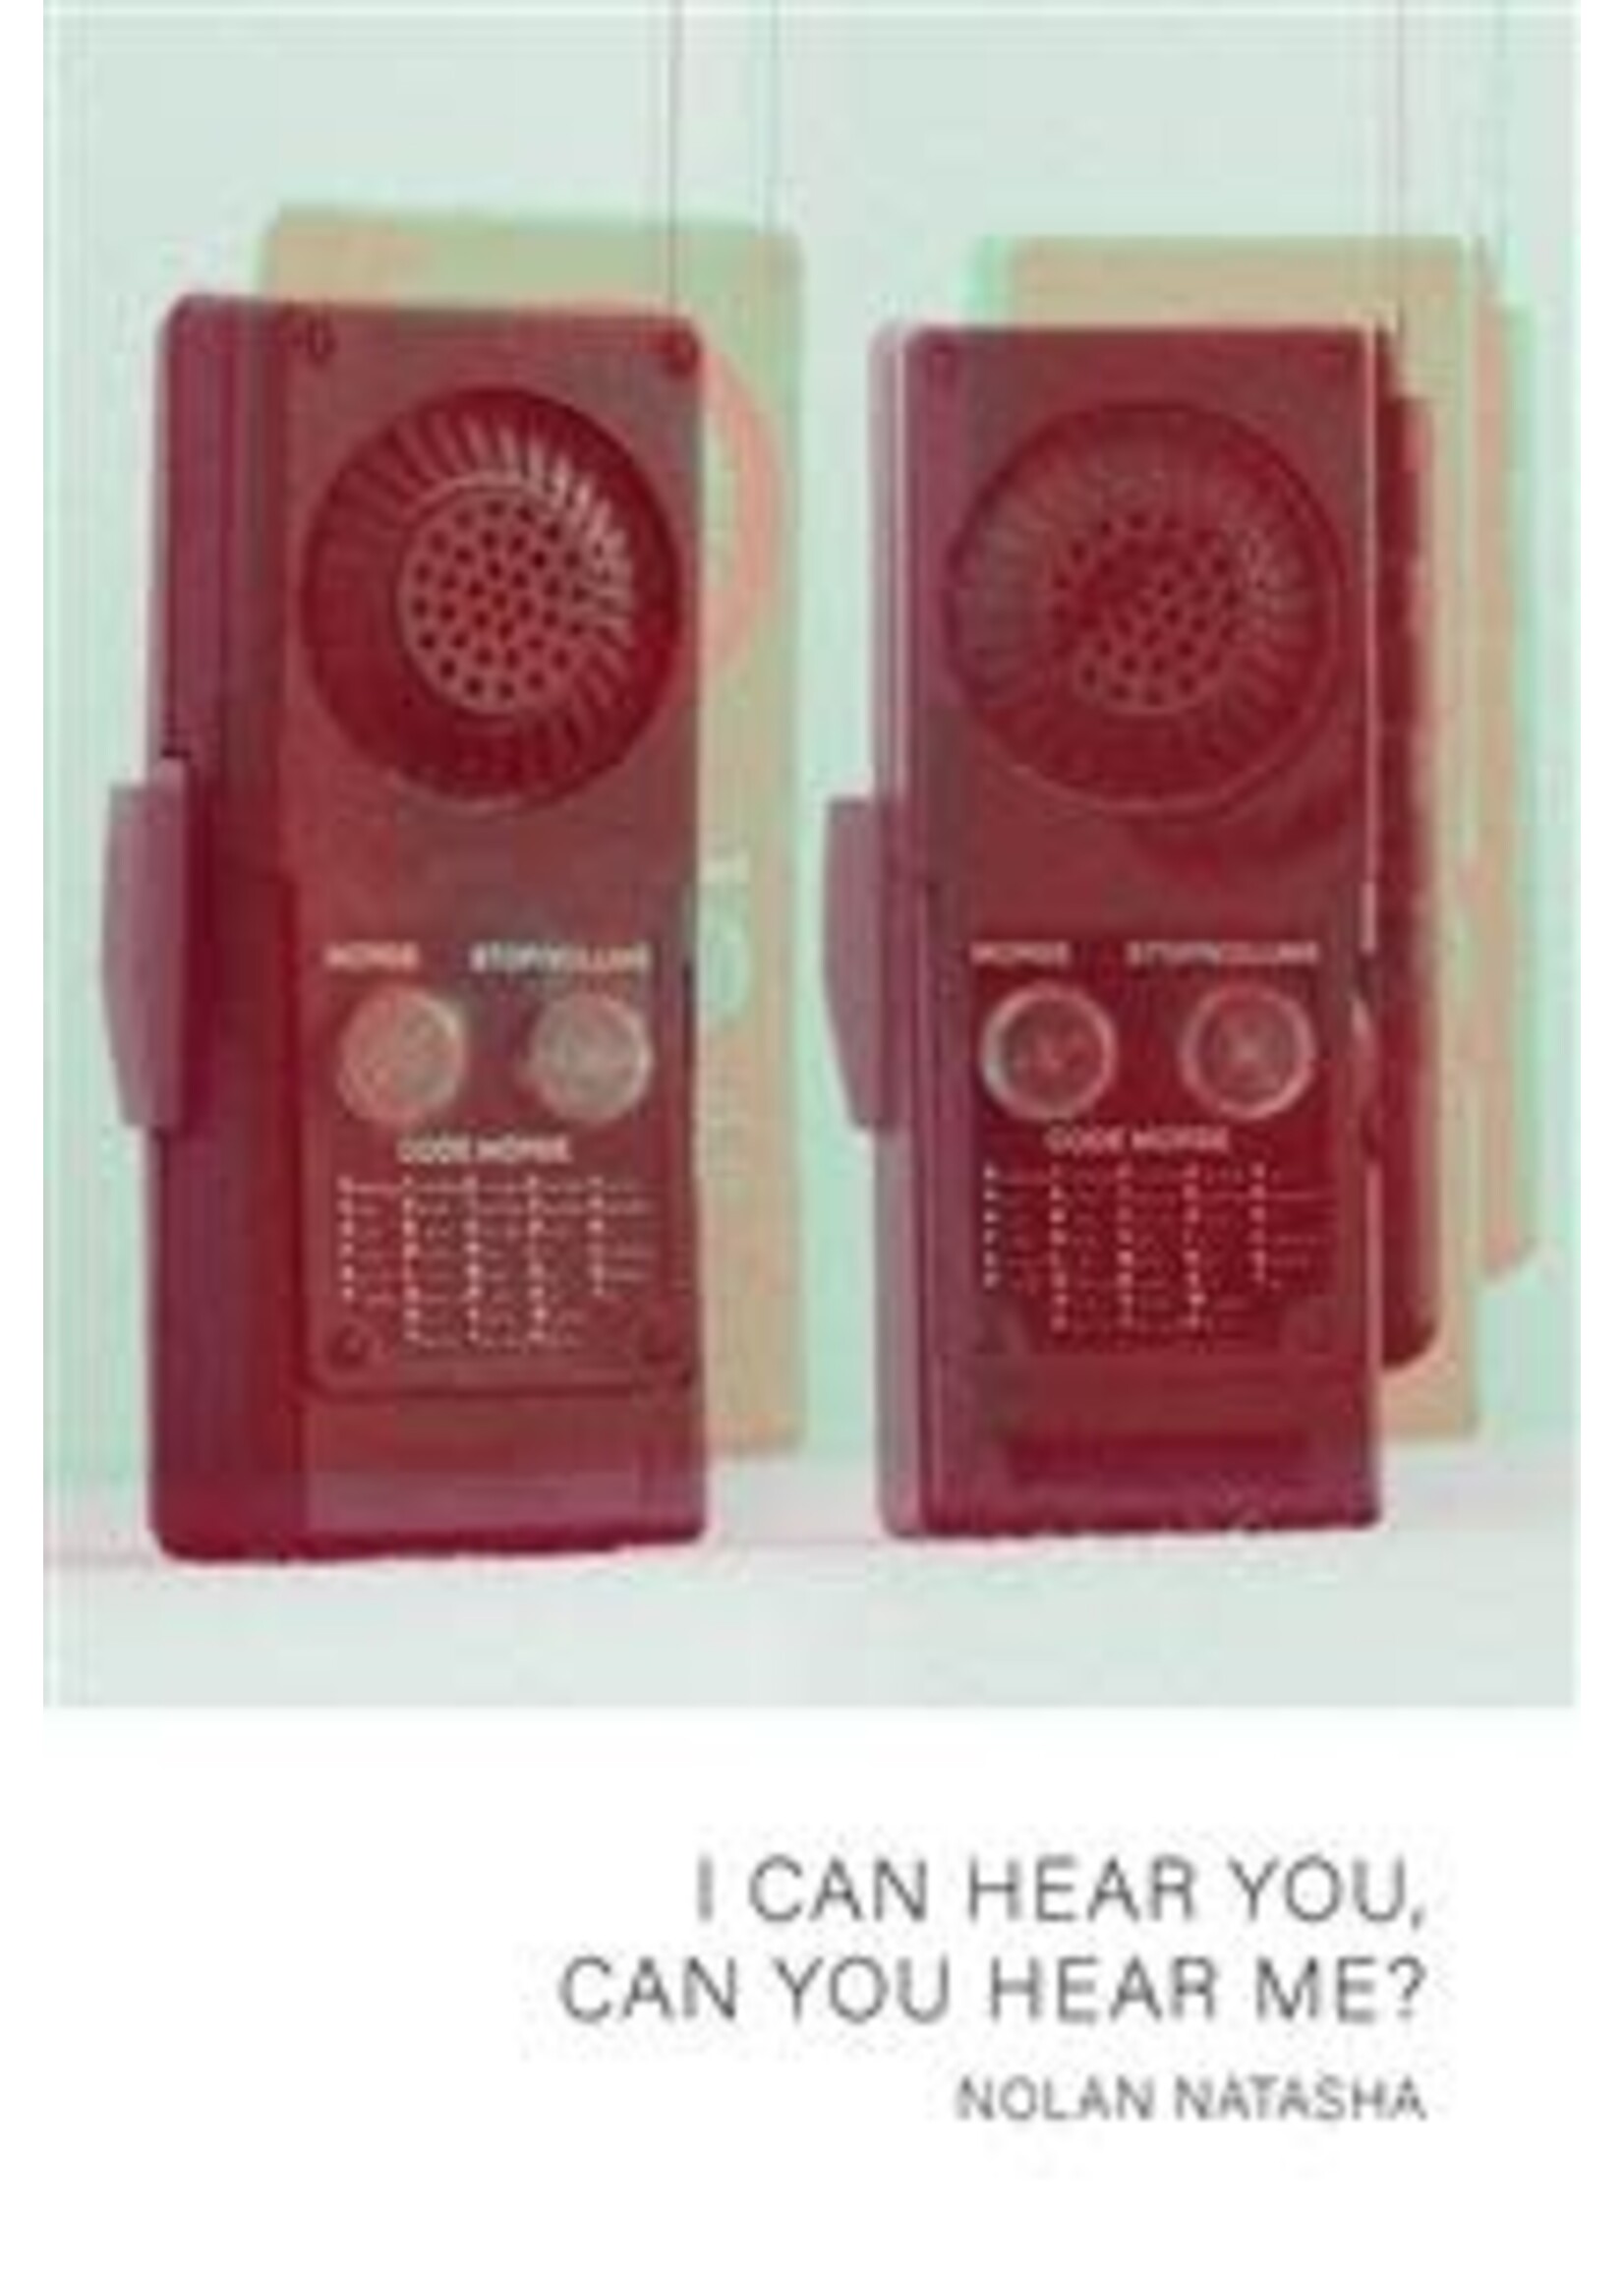 I Can Hear You, Can You Hear Me? by Nolan Natasha